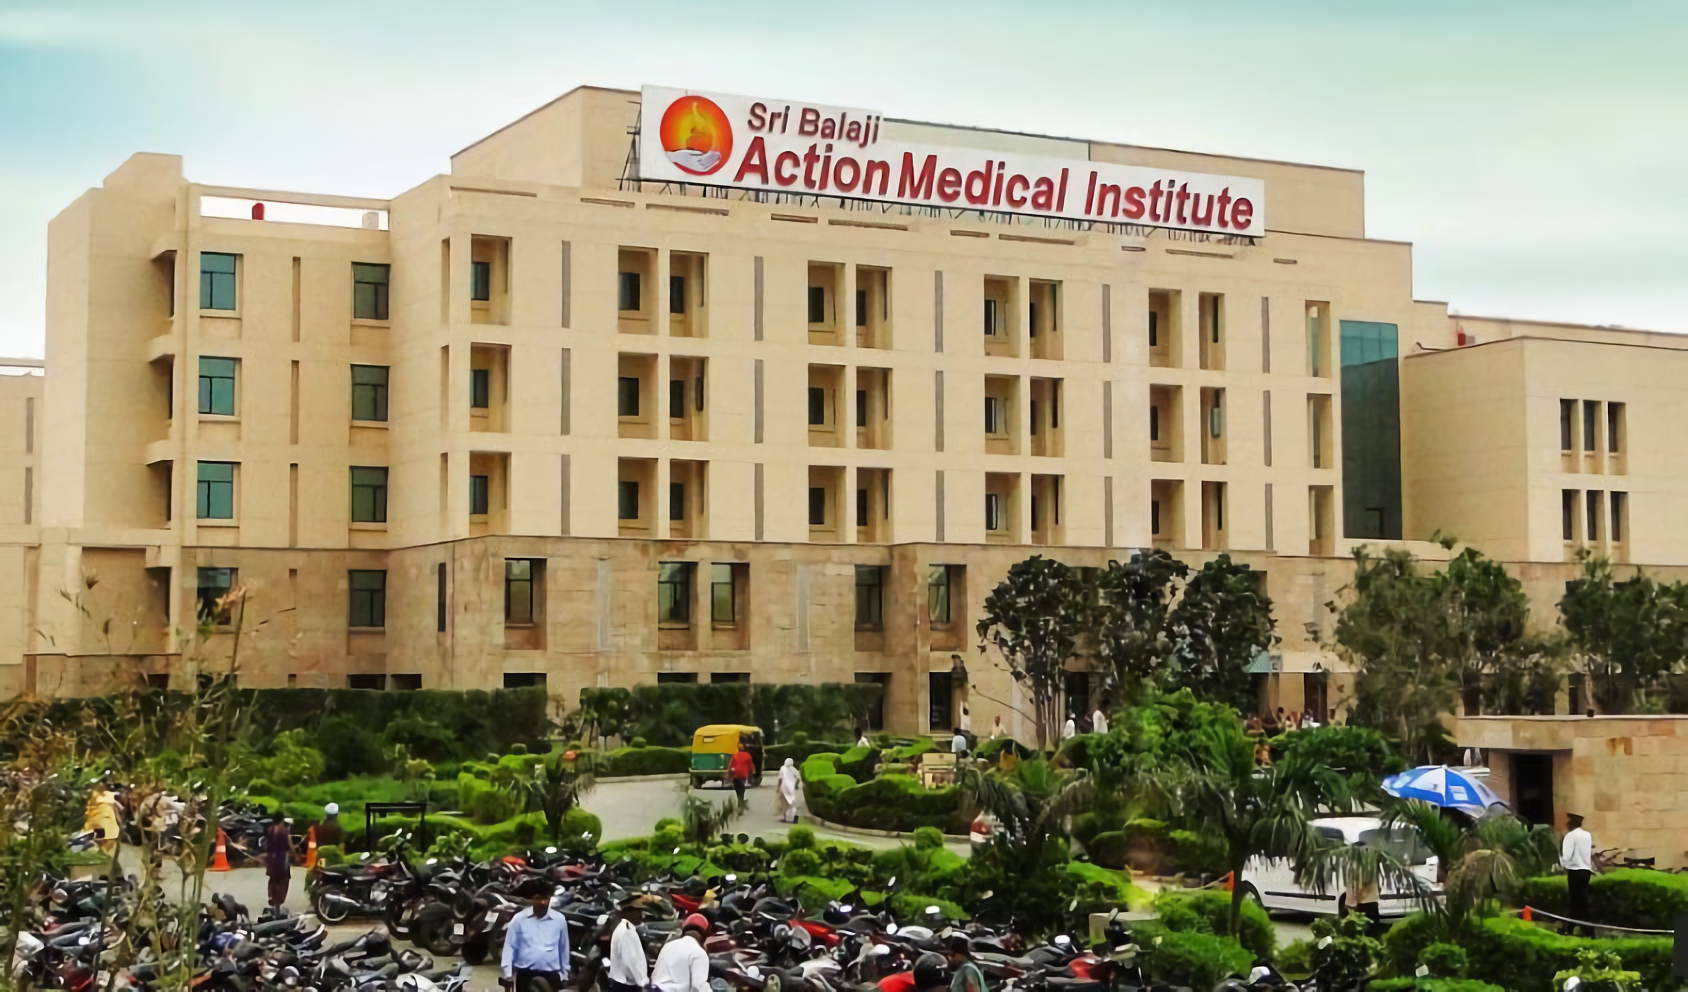 Sri Balaji Action Medical Institute photo